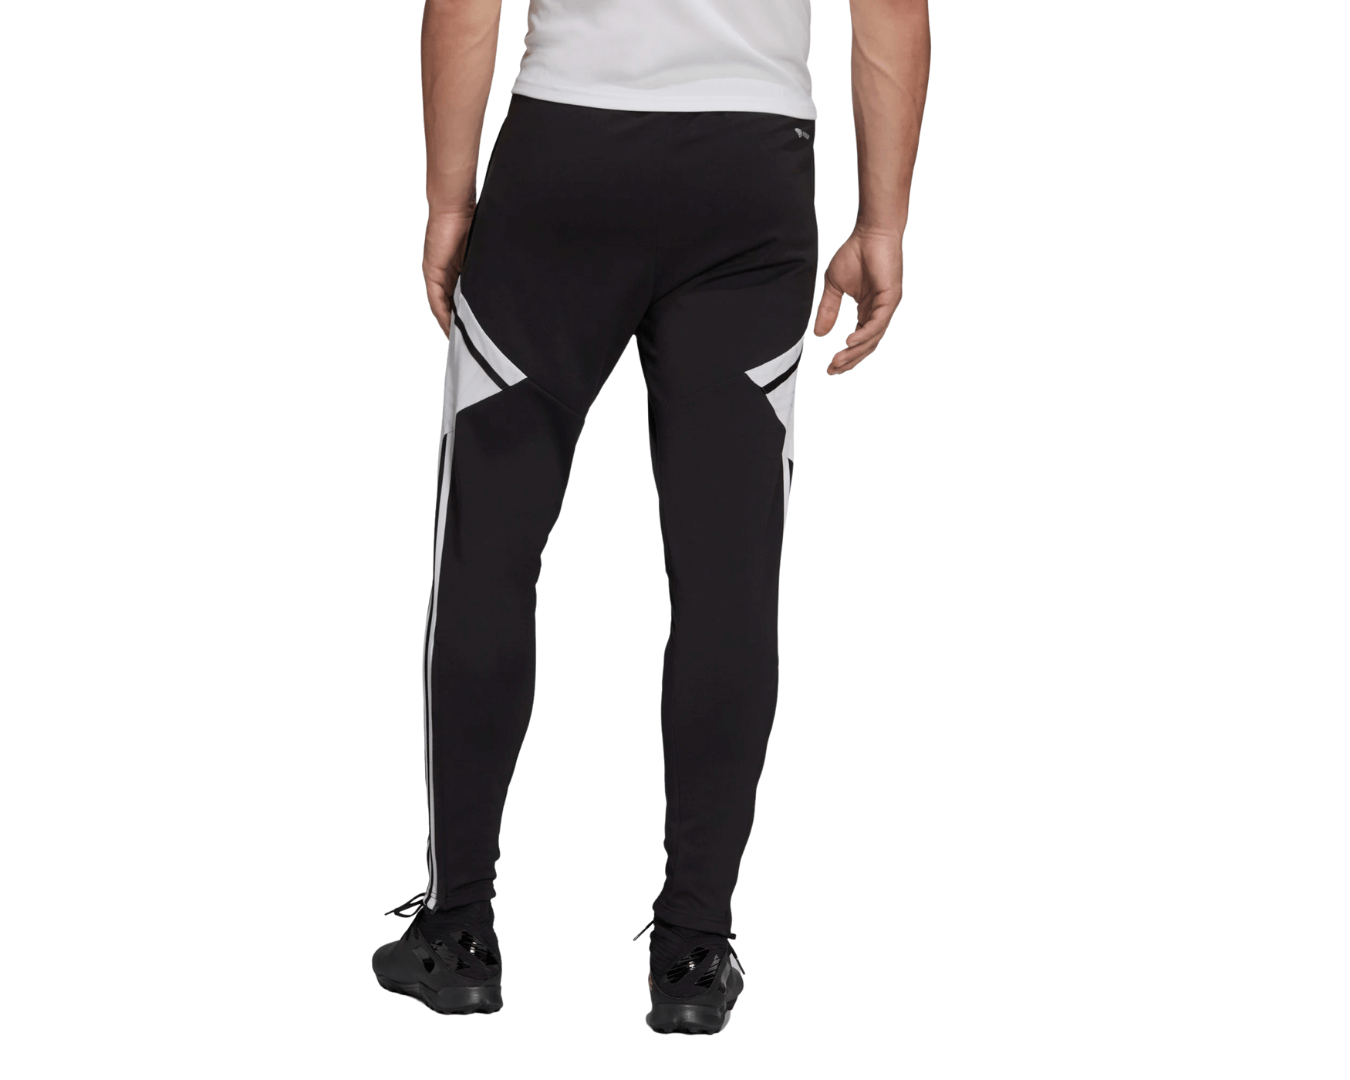 Adidas Condivo 14 Training Pants Women039s Tapered Leg Soccer Warmup   Size M  eBay